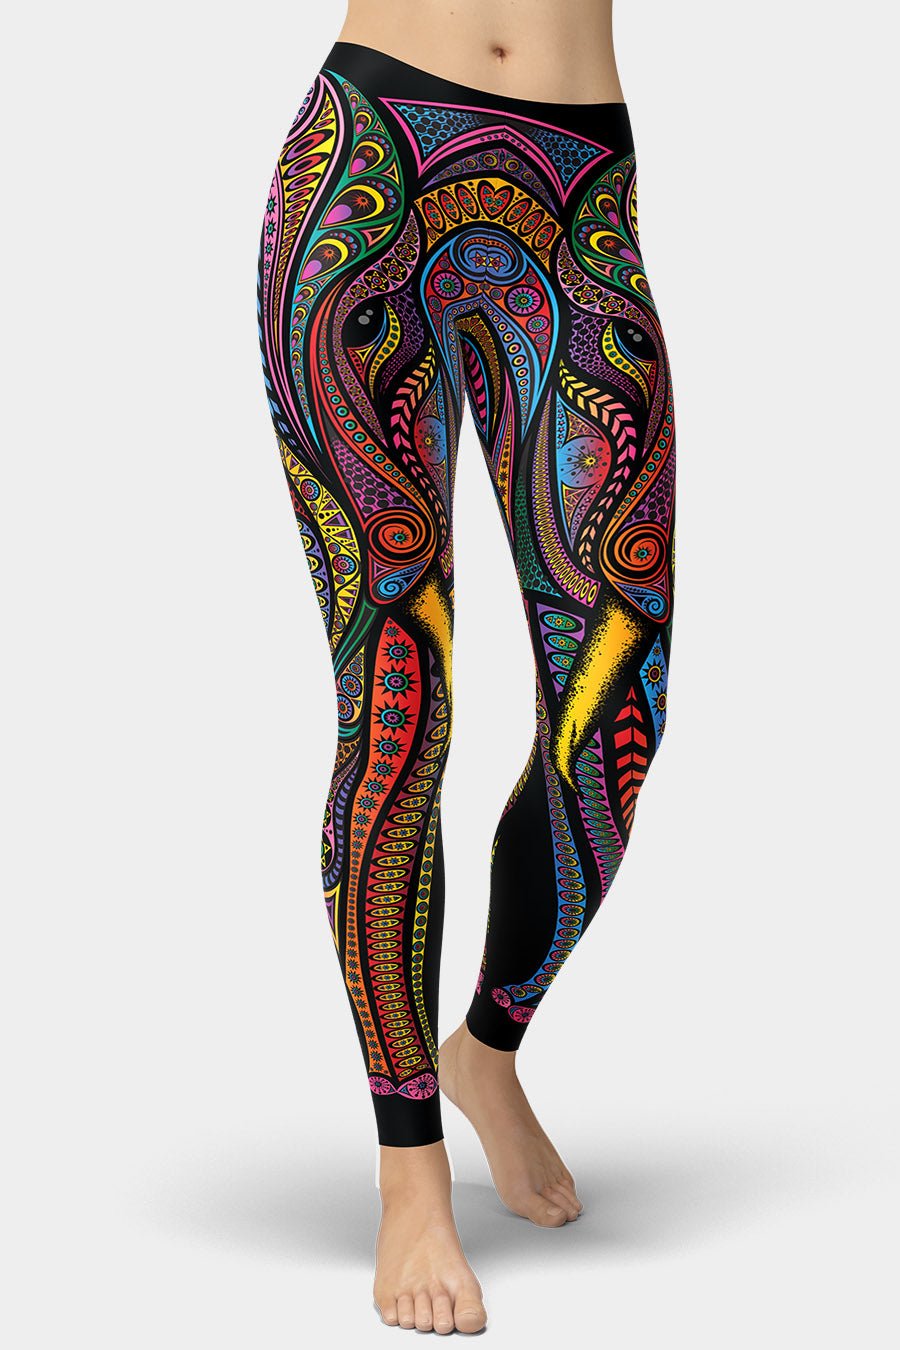 Colorful Elephant Leggings - SeeMyLeggings